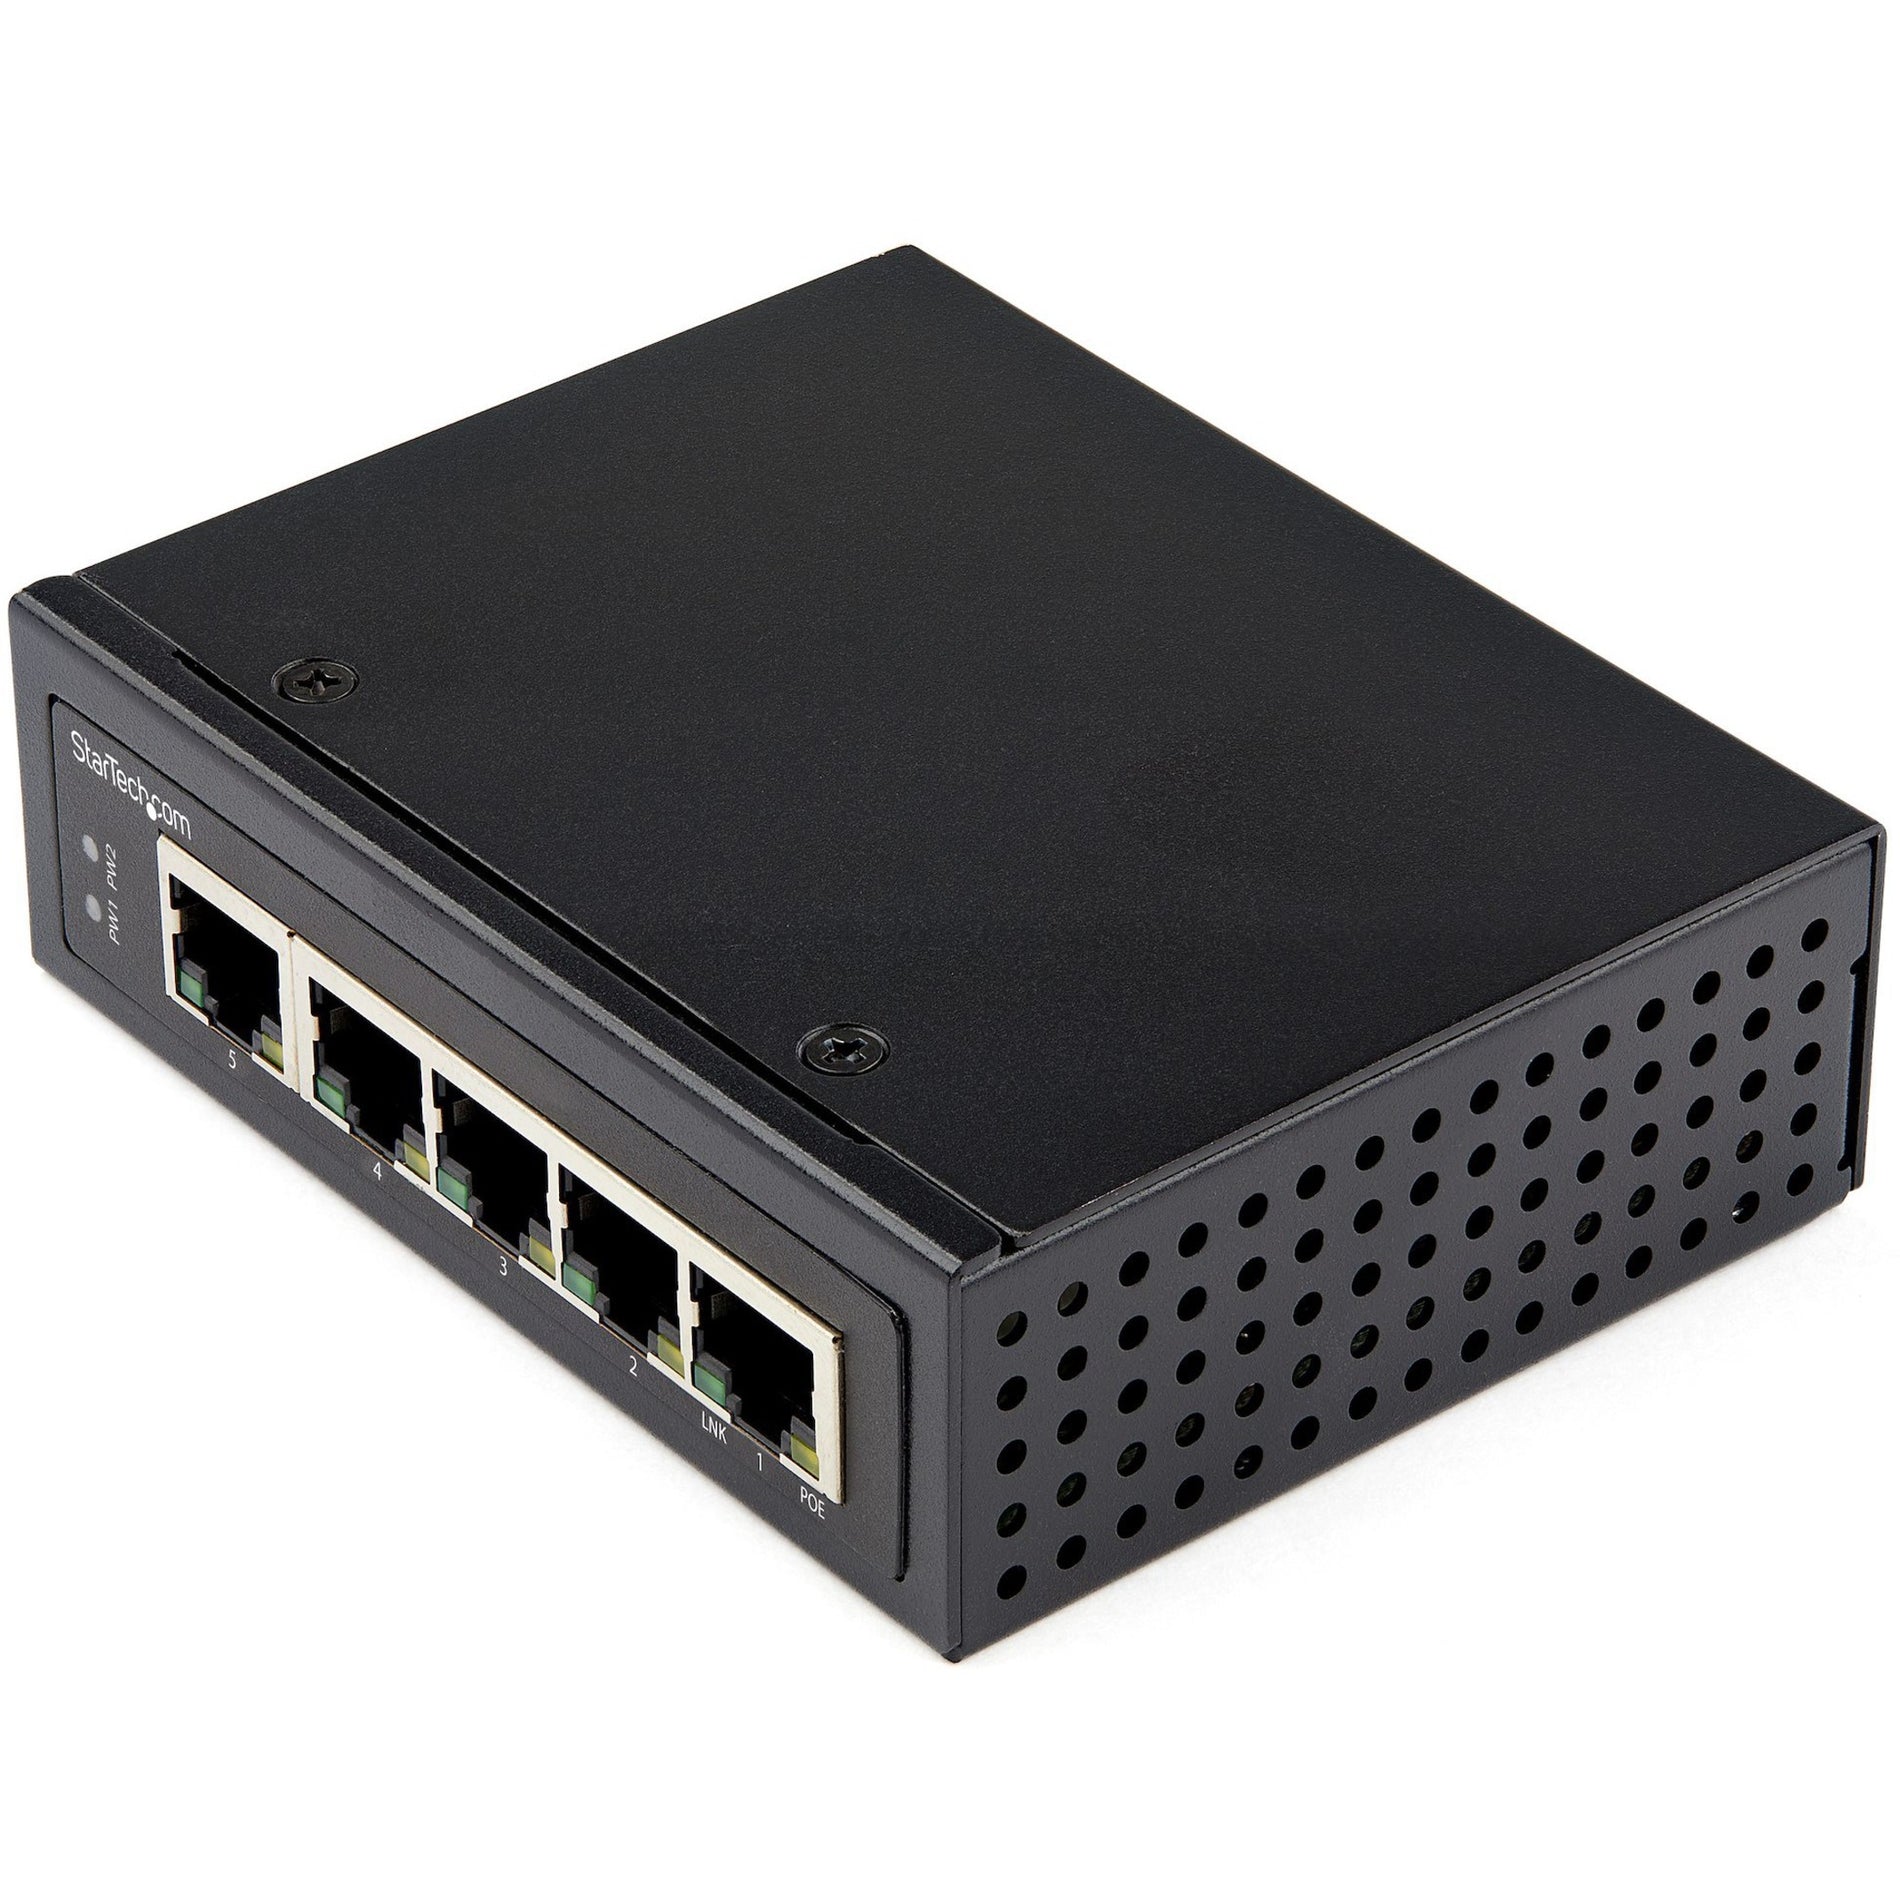 StarTech.com IESC1G50UP Ethernet Switch, 5-Port Gigabit Ethernet PoE+ Switch with 120W PoE Budget